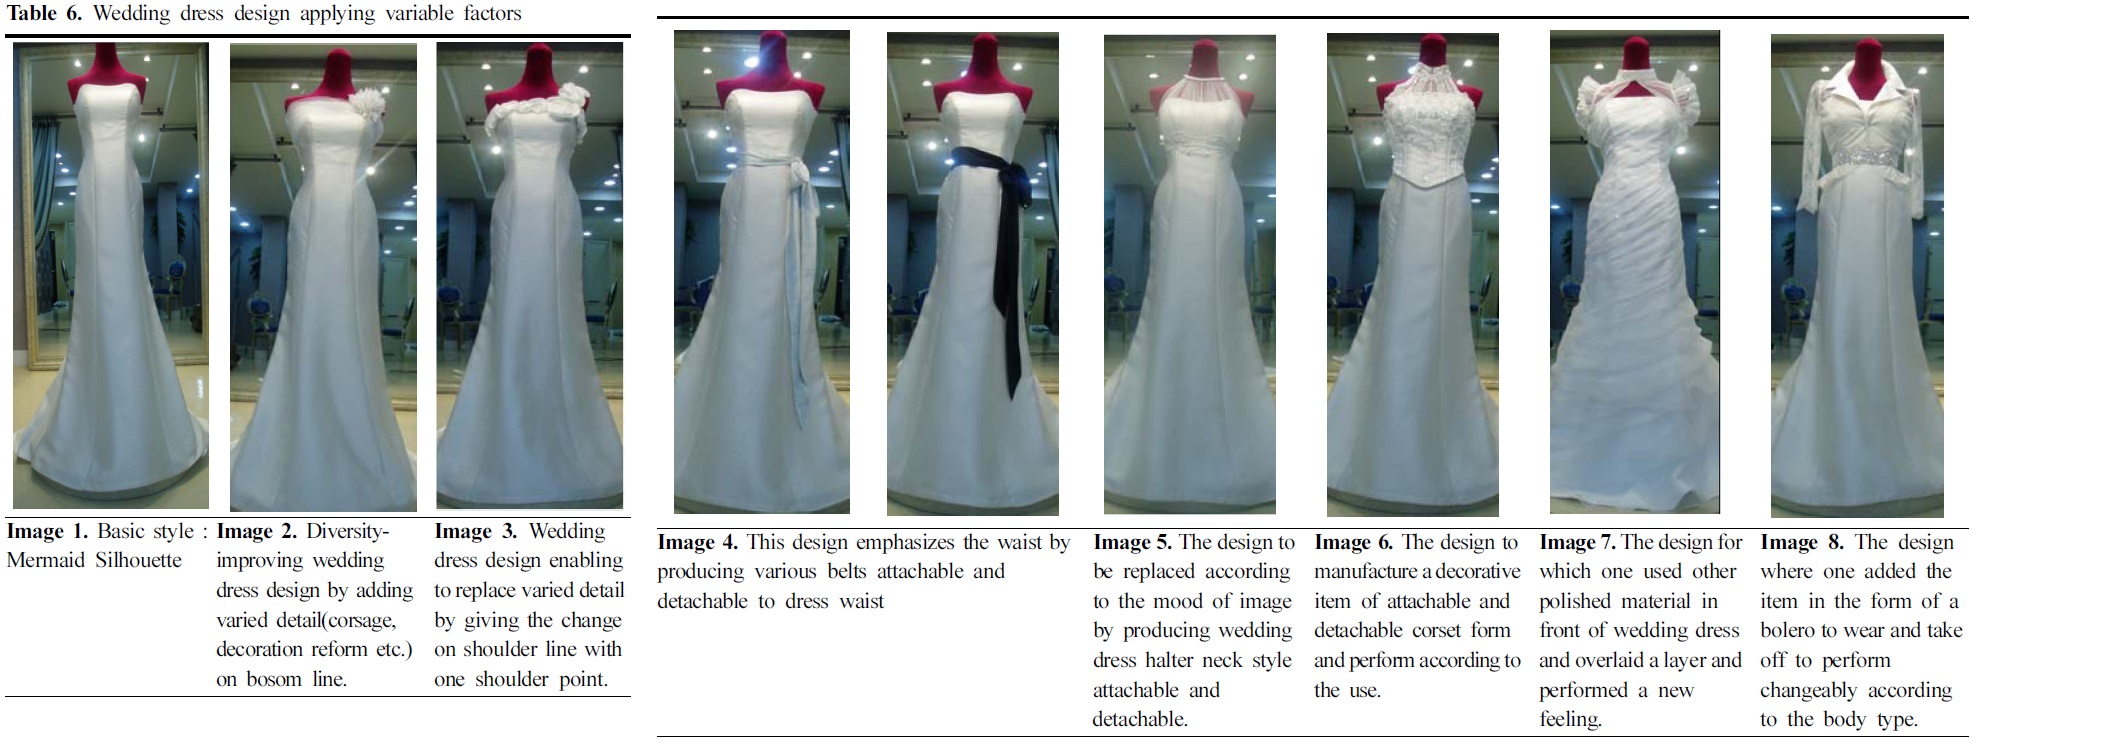 Wedding dress design applying variable factors